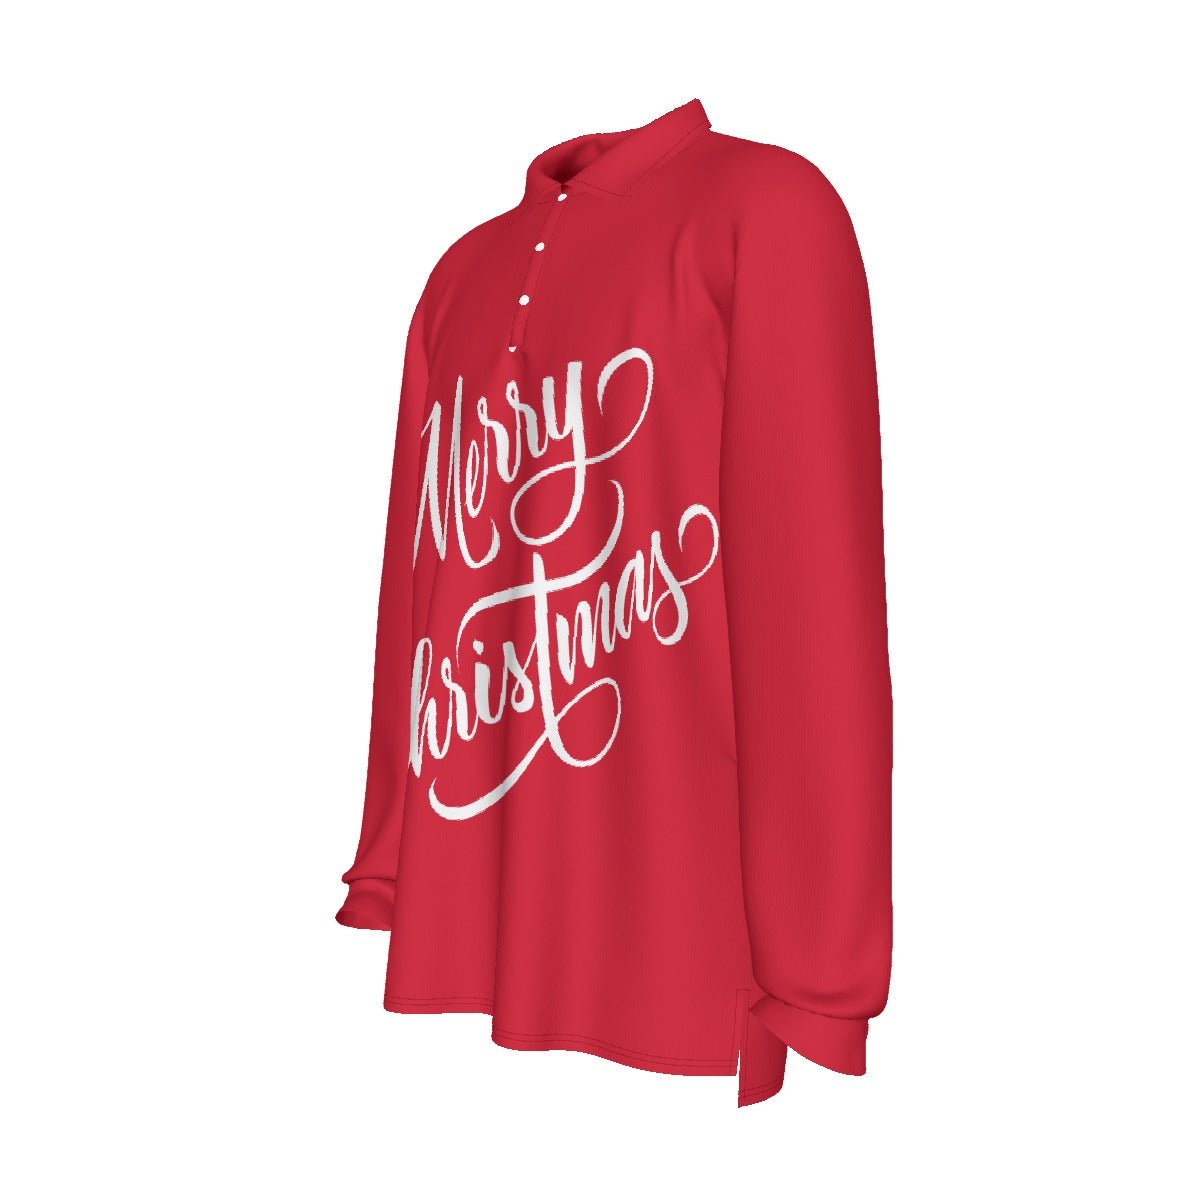 Men's Long Sleeve Christmas Polo Shirt - Merry Christmas - Red - Festive Style